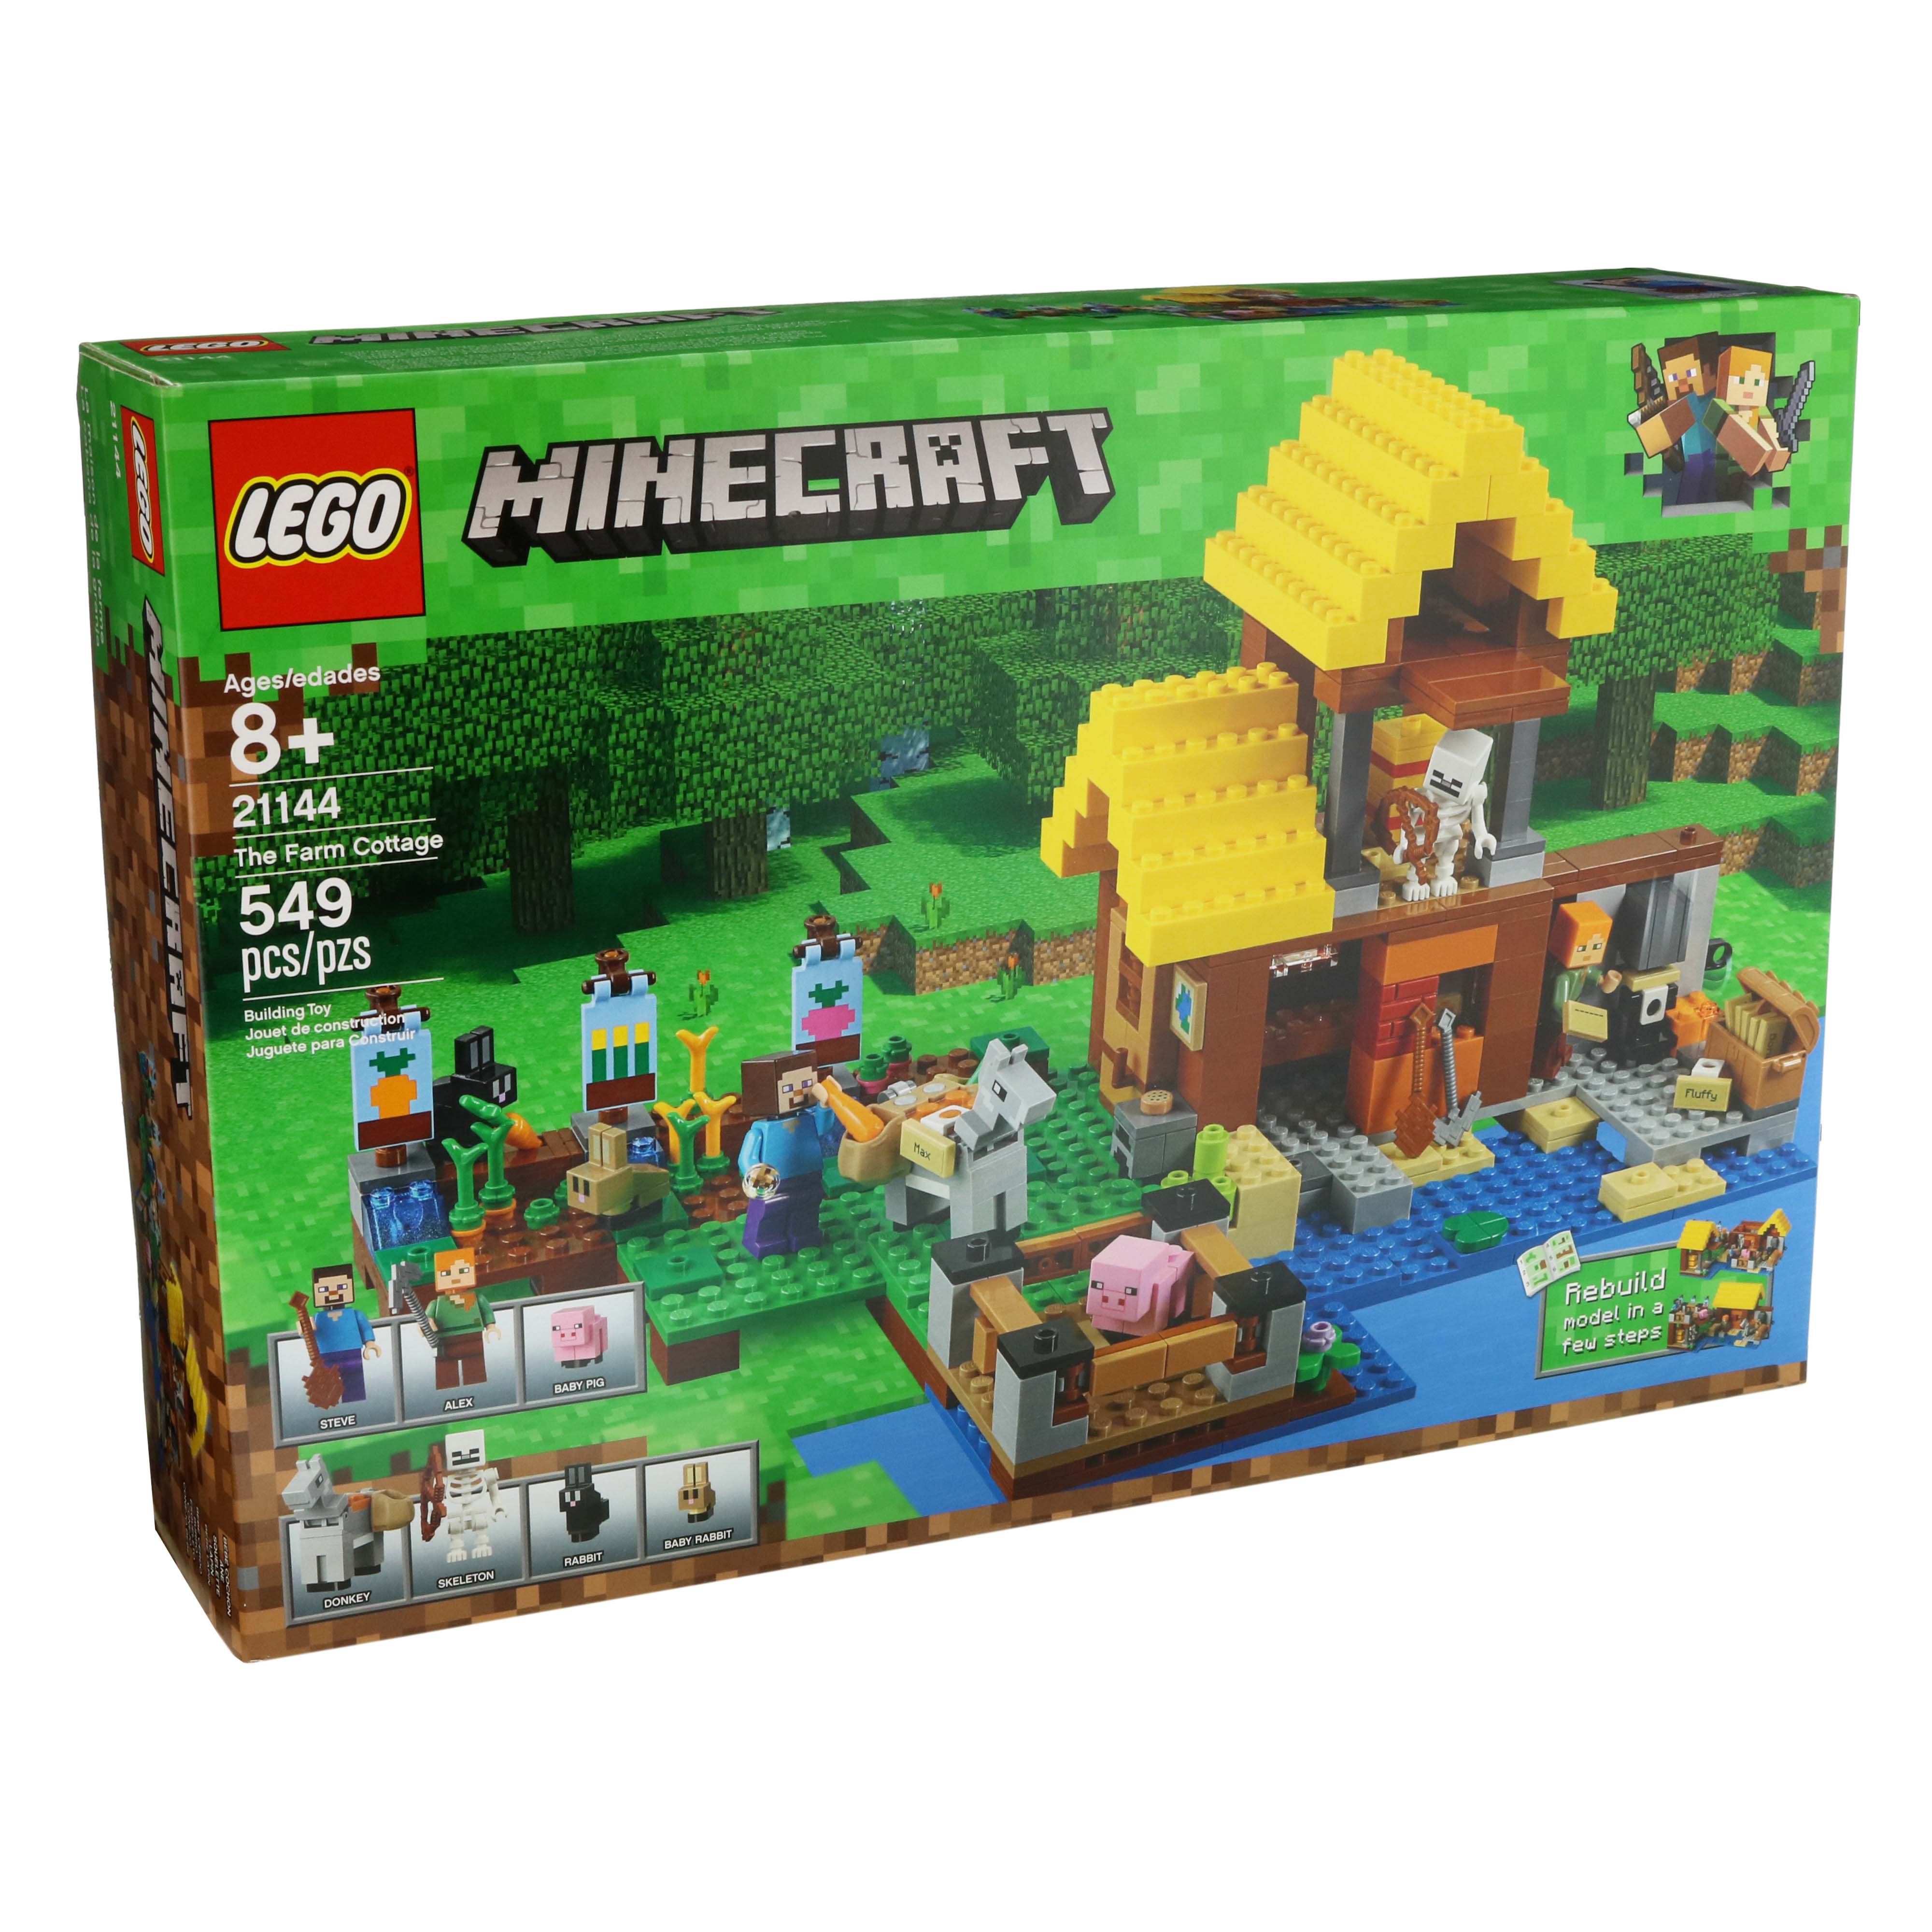 minecraft lego the farm cottage